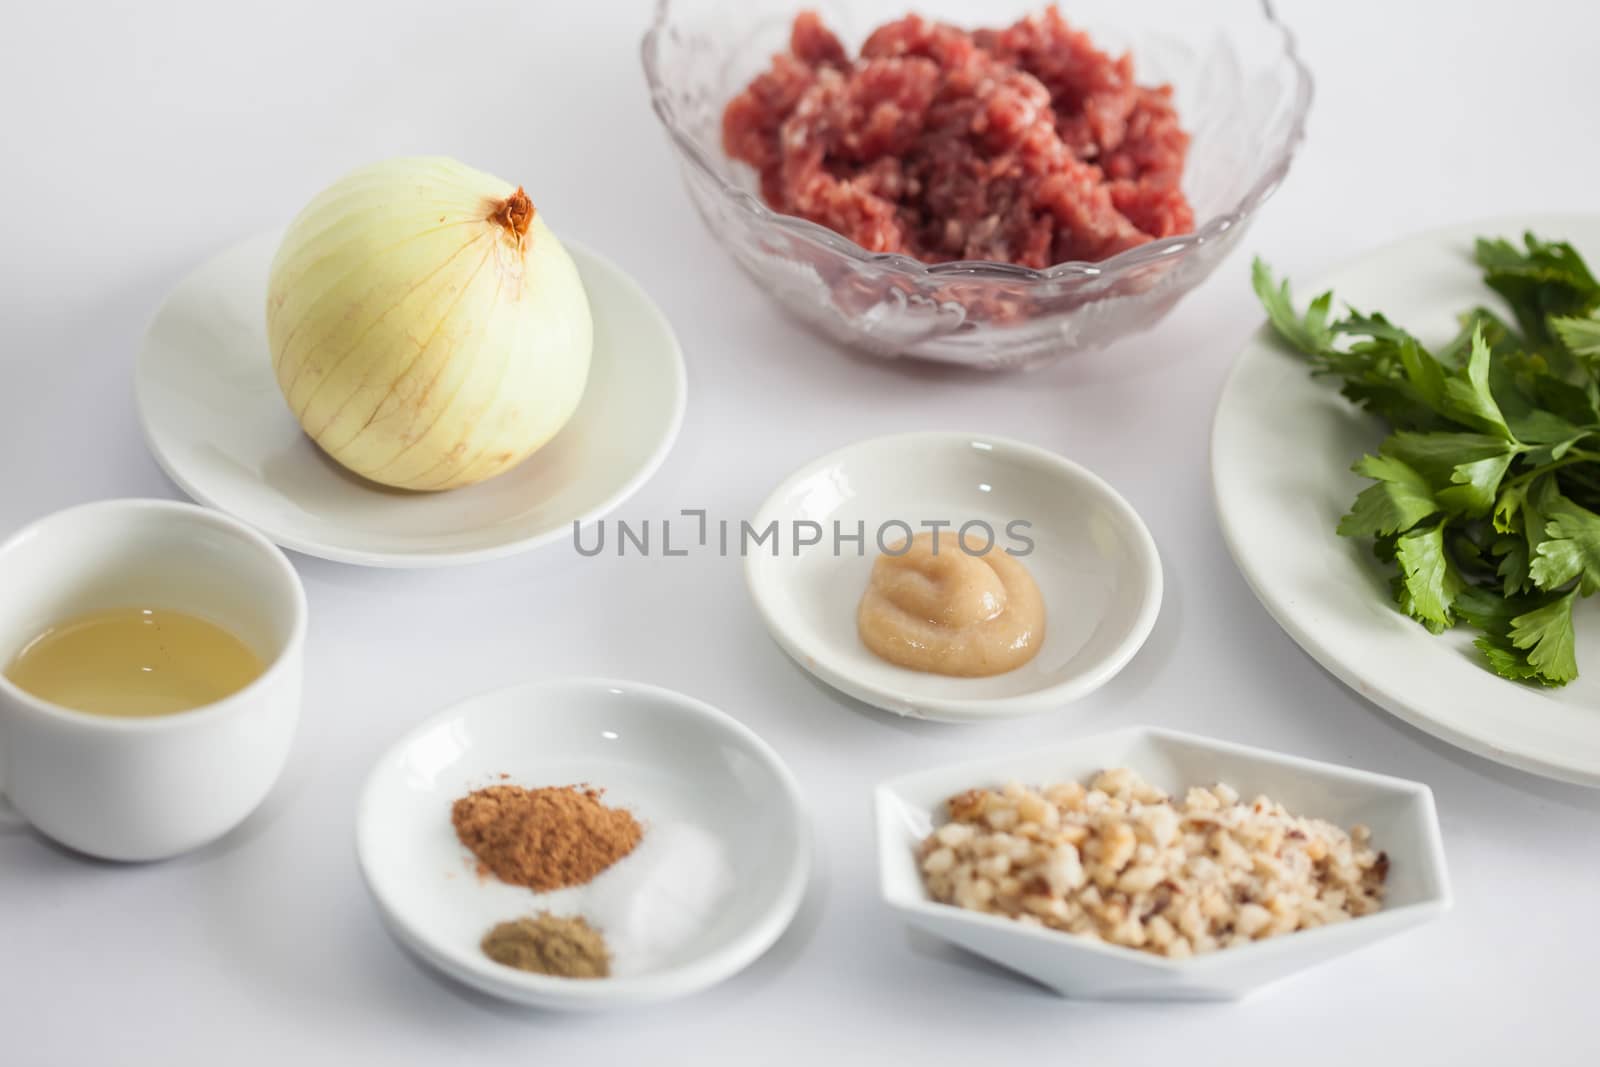 Step by step Levantine cuisine kibbeh preparation : Ingredients to prepare kibbeh filling mix